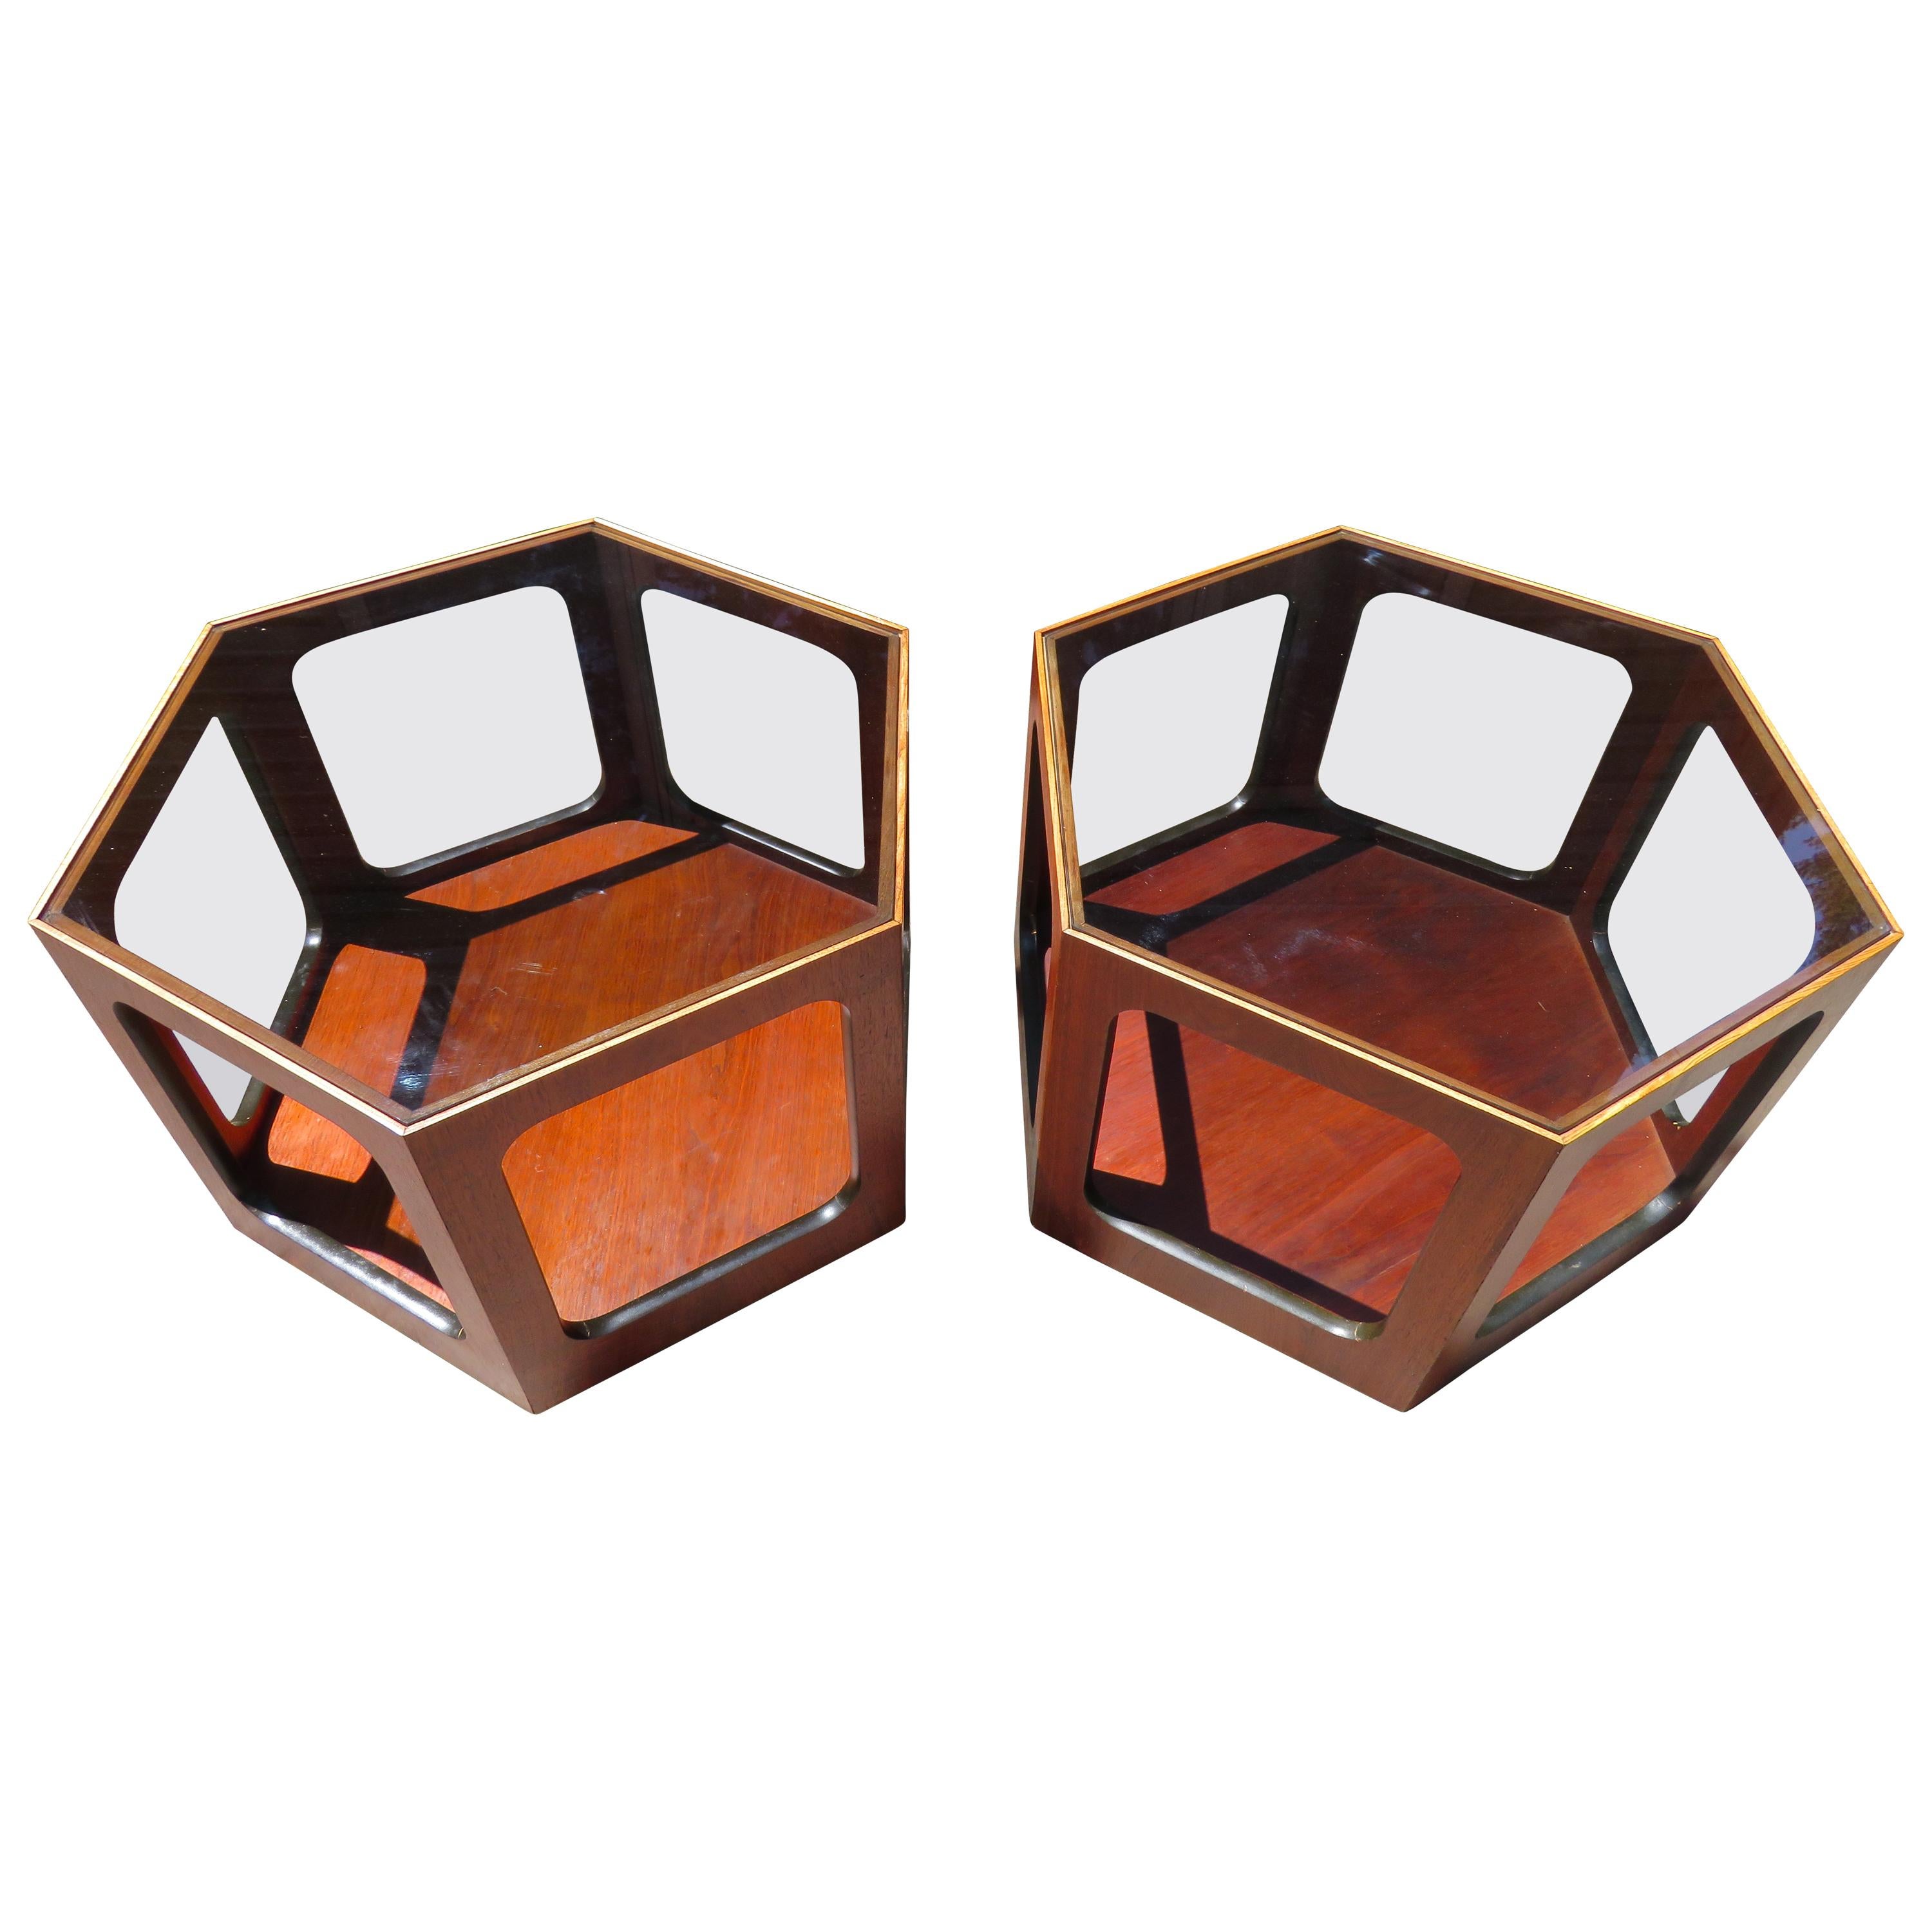 Wonderful Pair of Lane Octagon Glass Walnut Side End Tables Mid-Century Modern